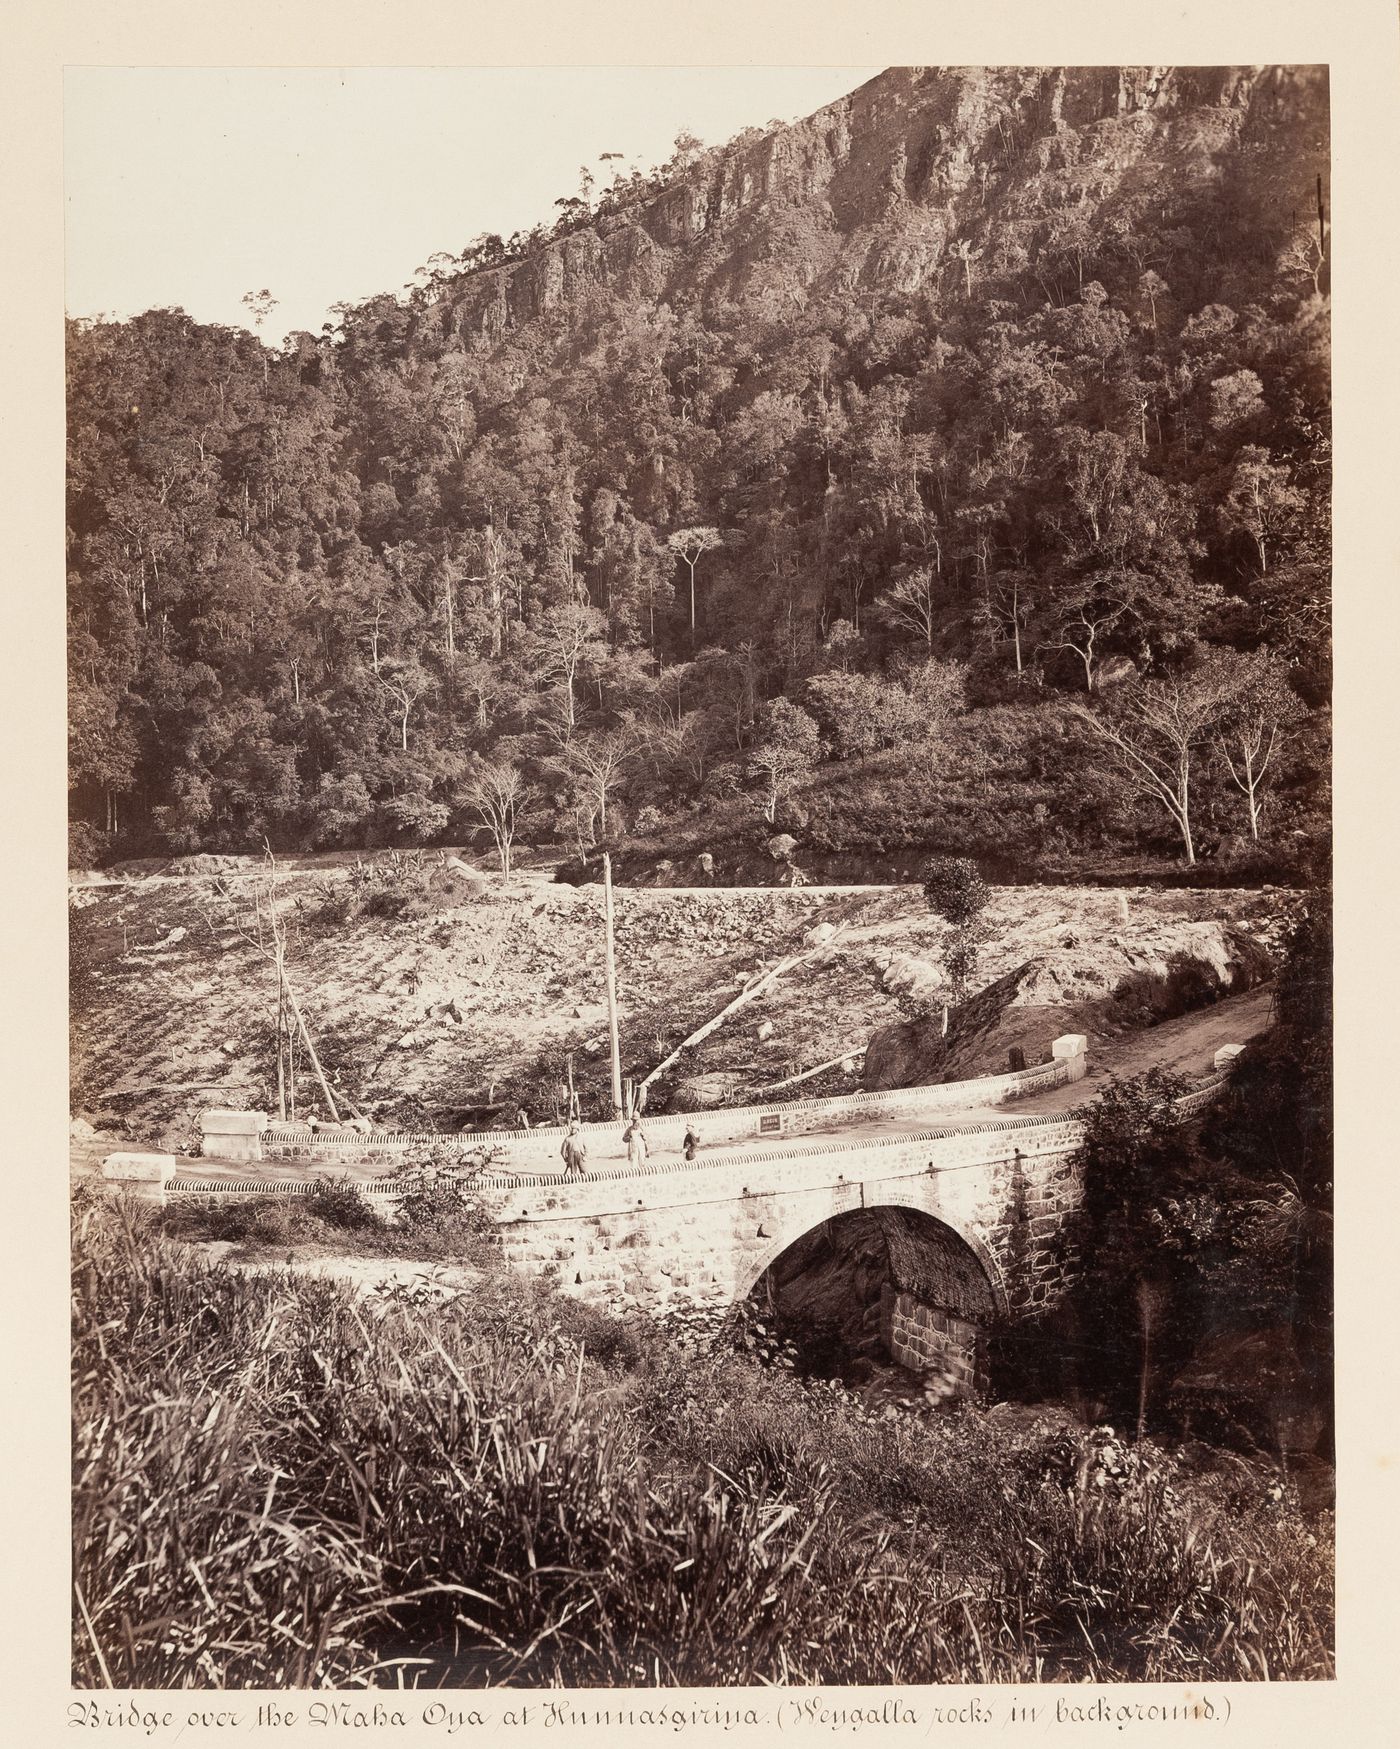 View of a bridge over the Maha Oya, Hunnasgiriya, Ceylon (now Sri Lanka)